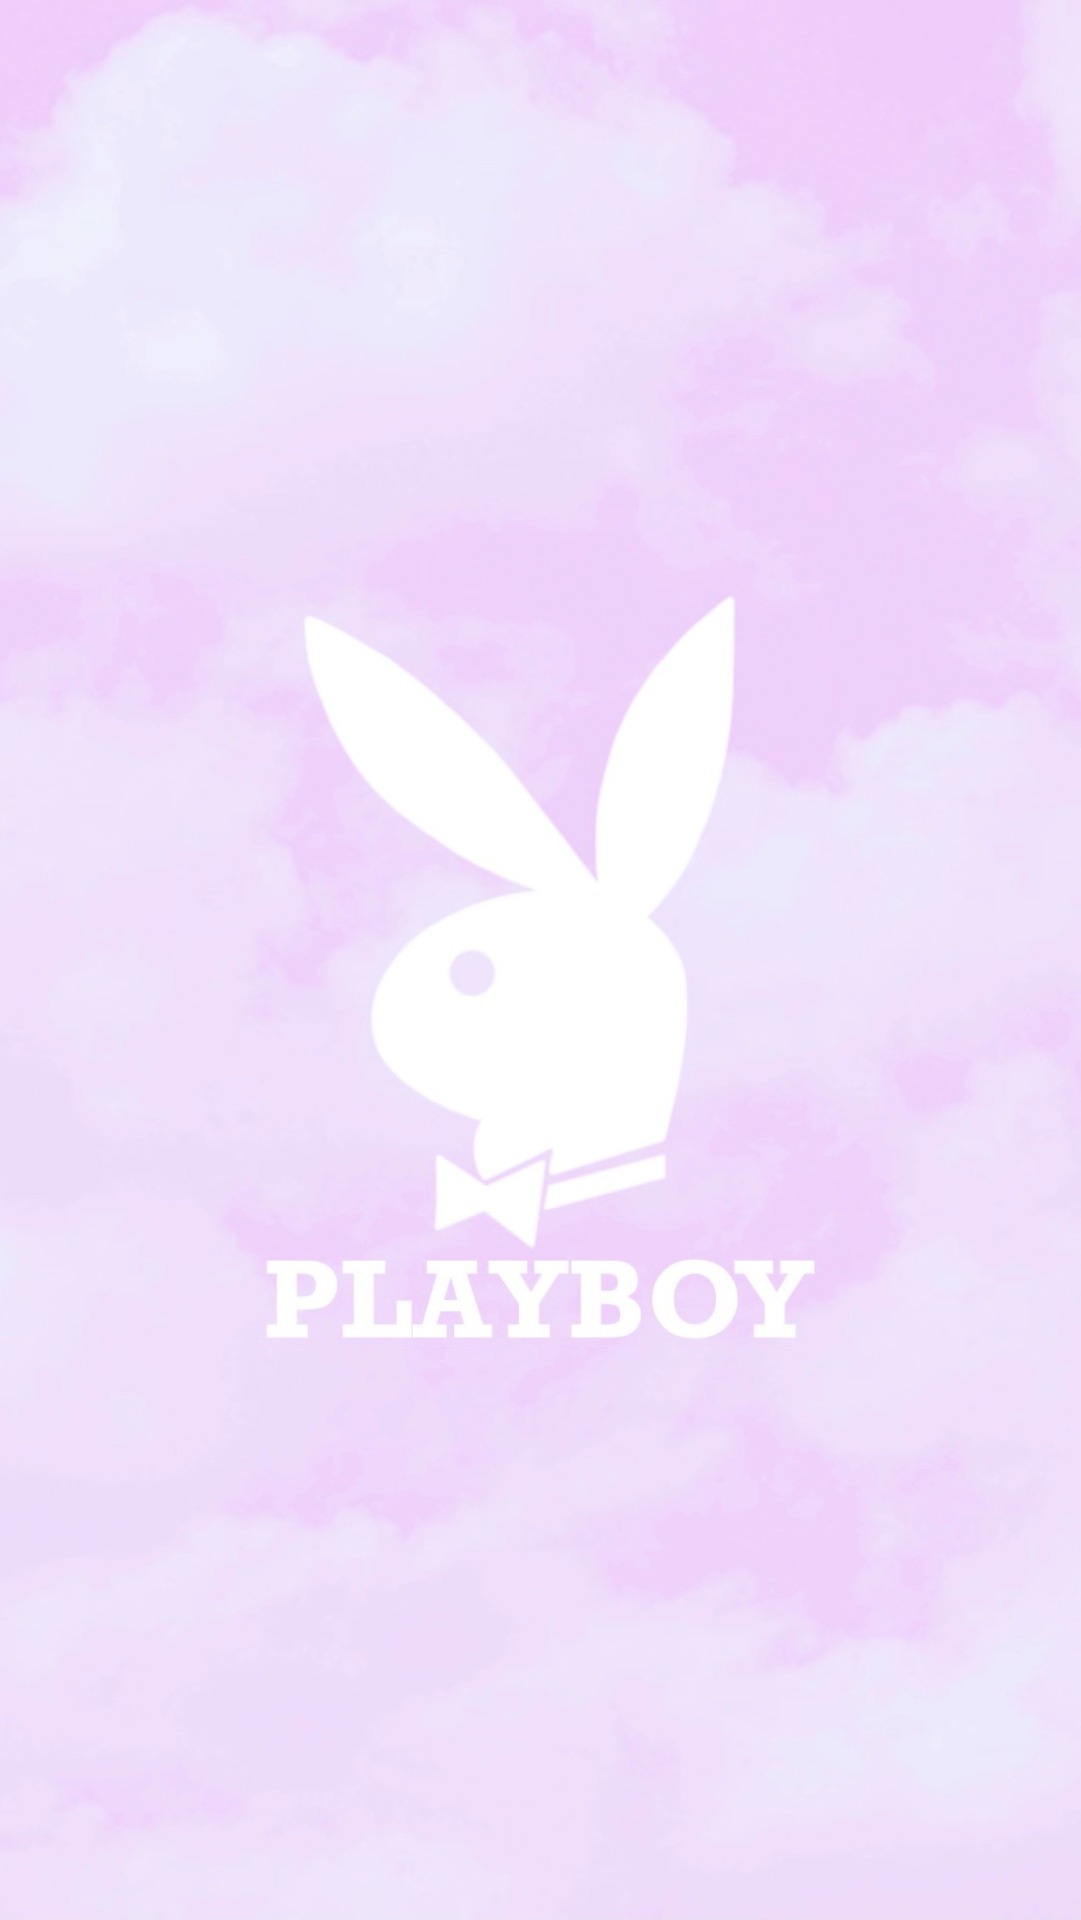 playboy logo Tumblr posts